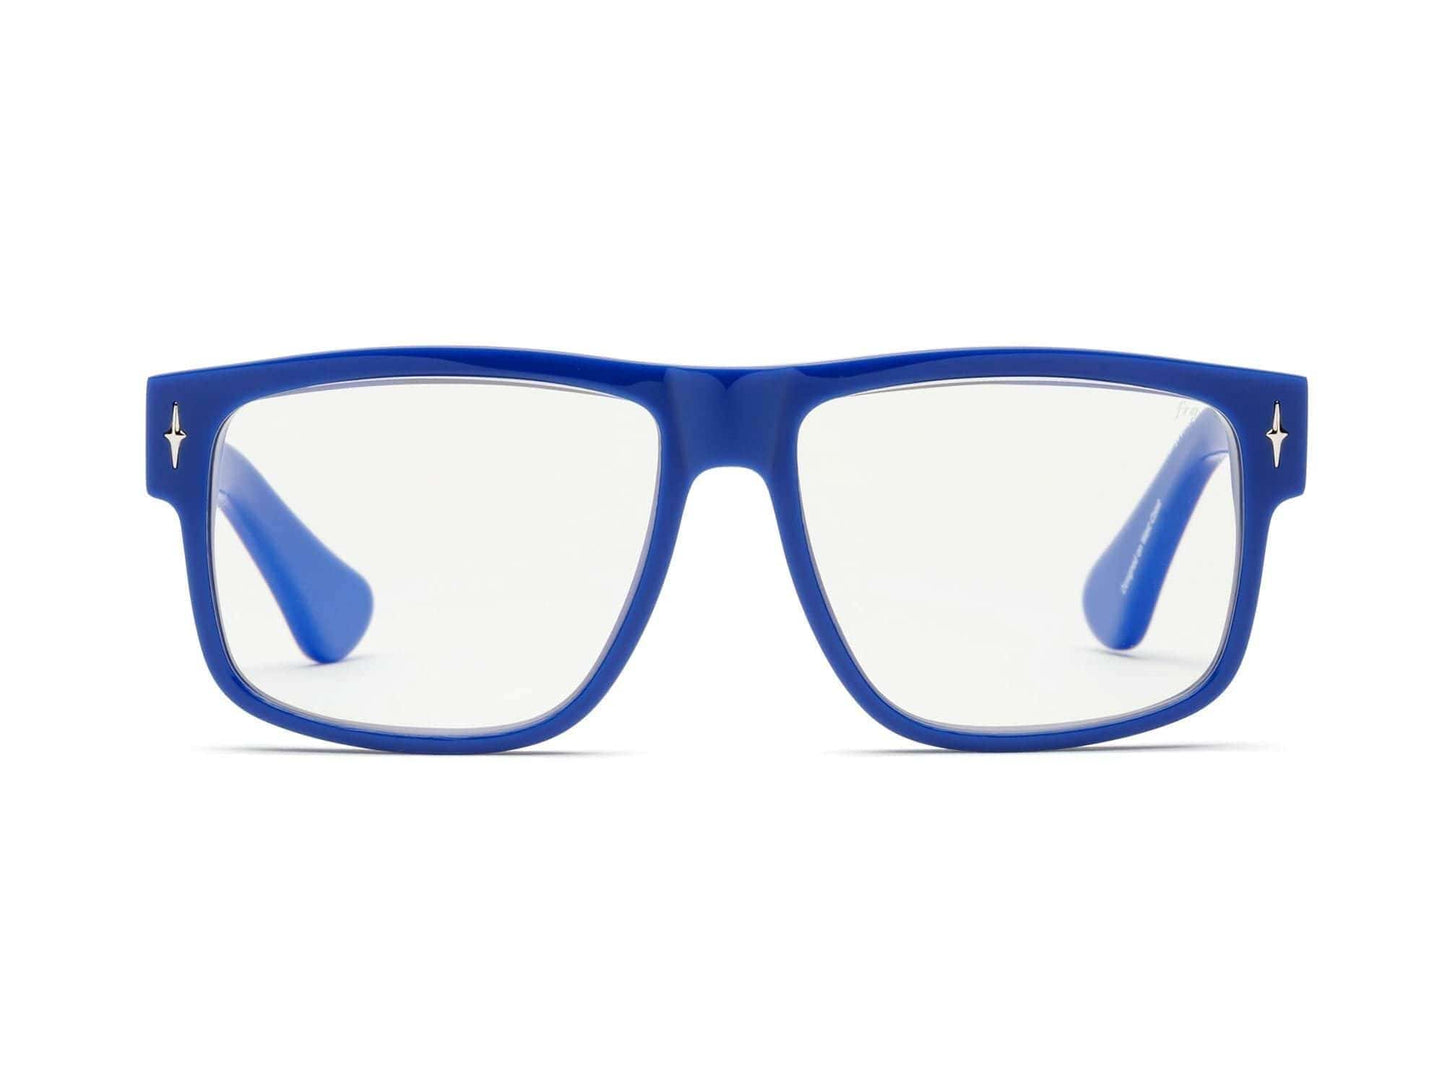 CADDIS Mister Cartoon Reading Glasses - Cobalt Blue